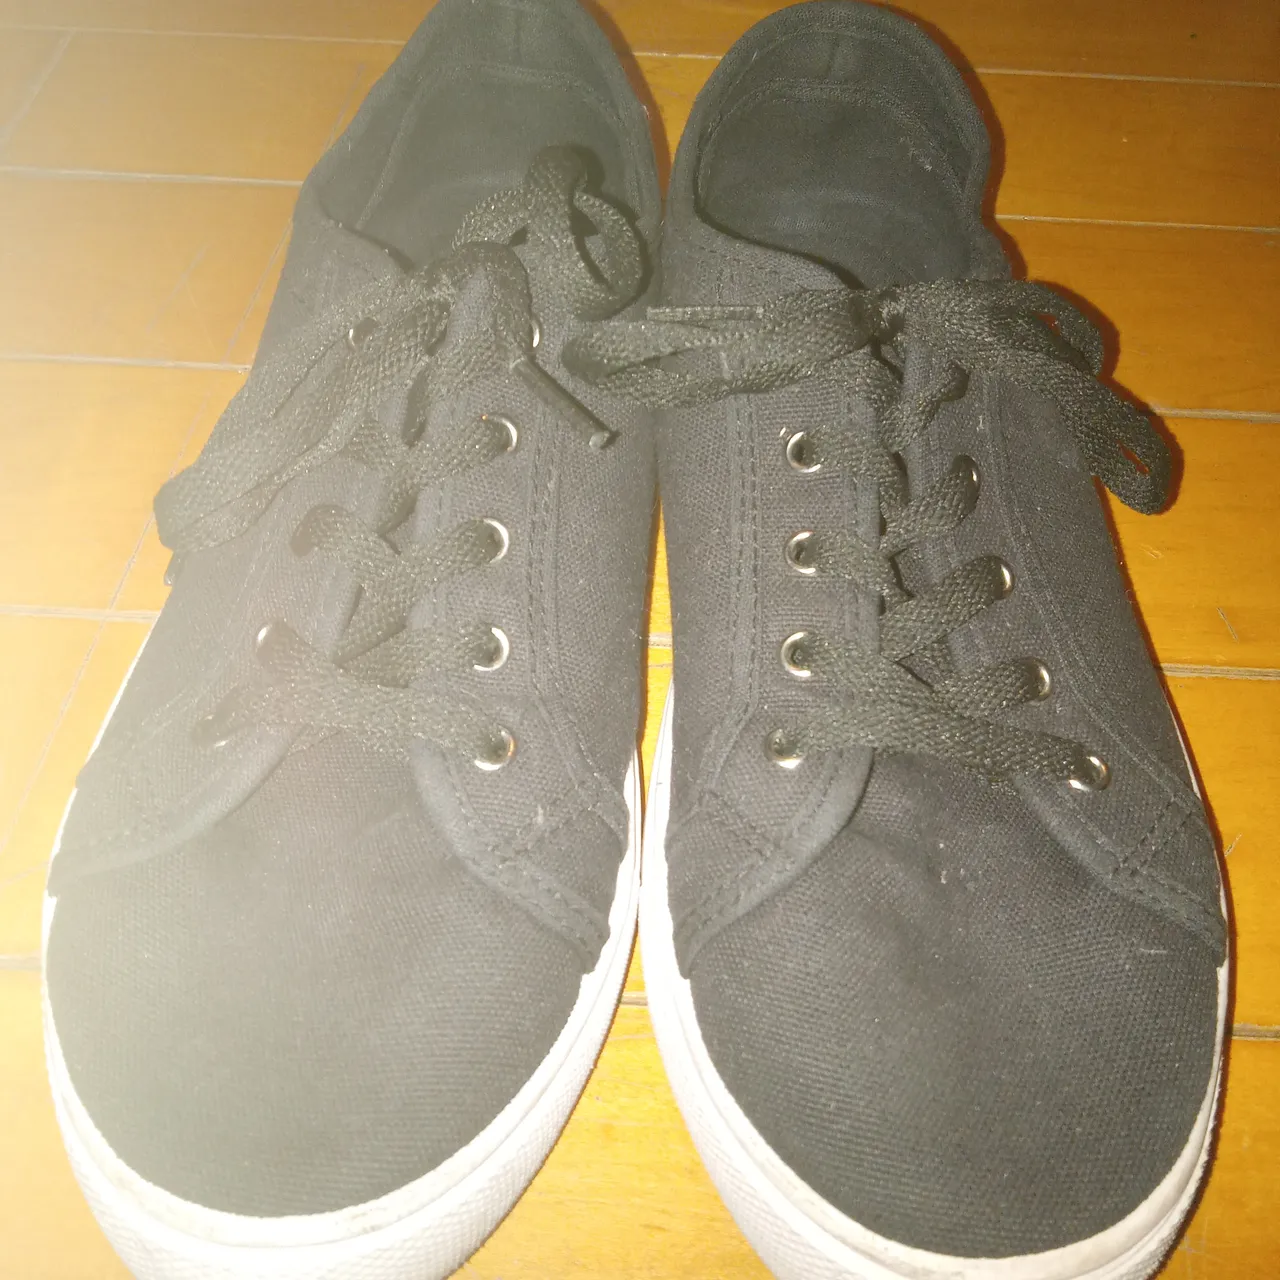 Black shoes (converse style) photo 1